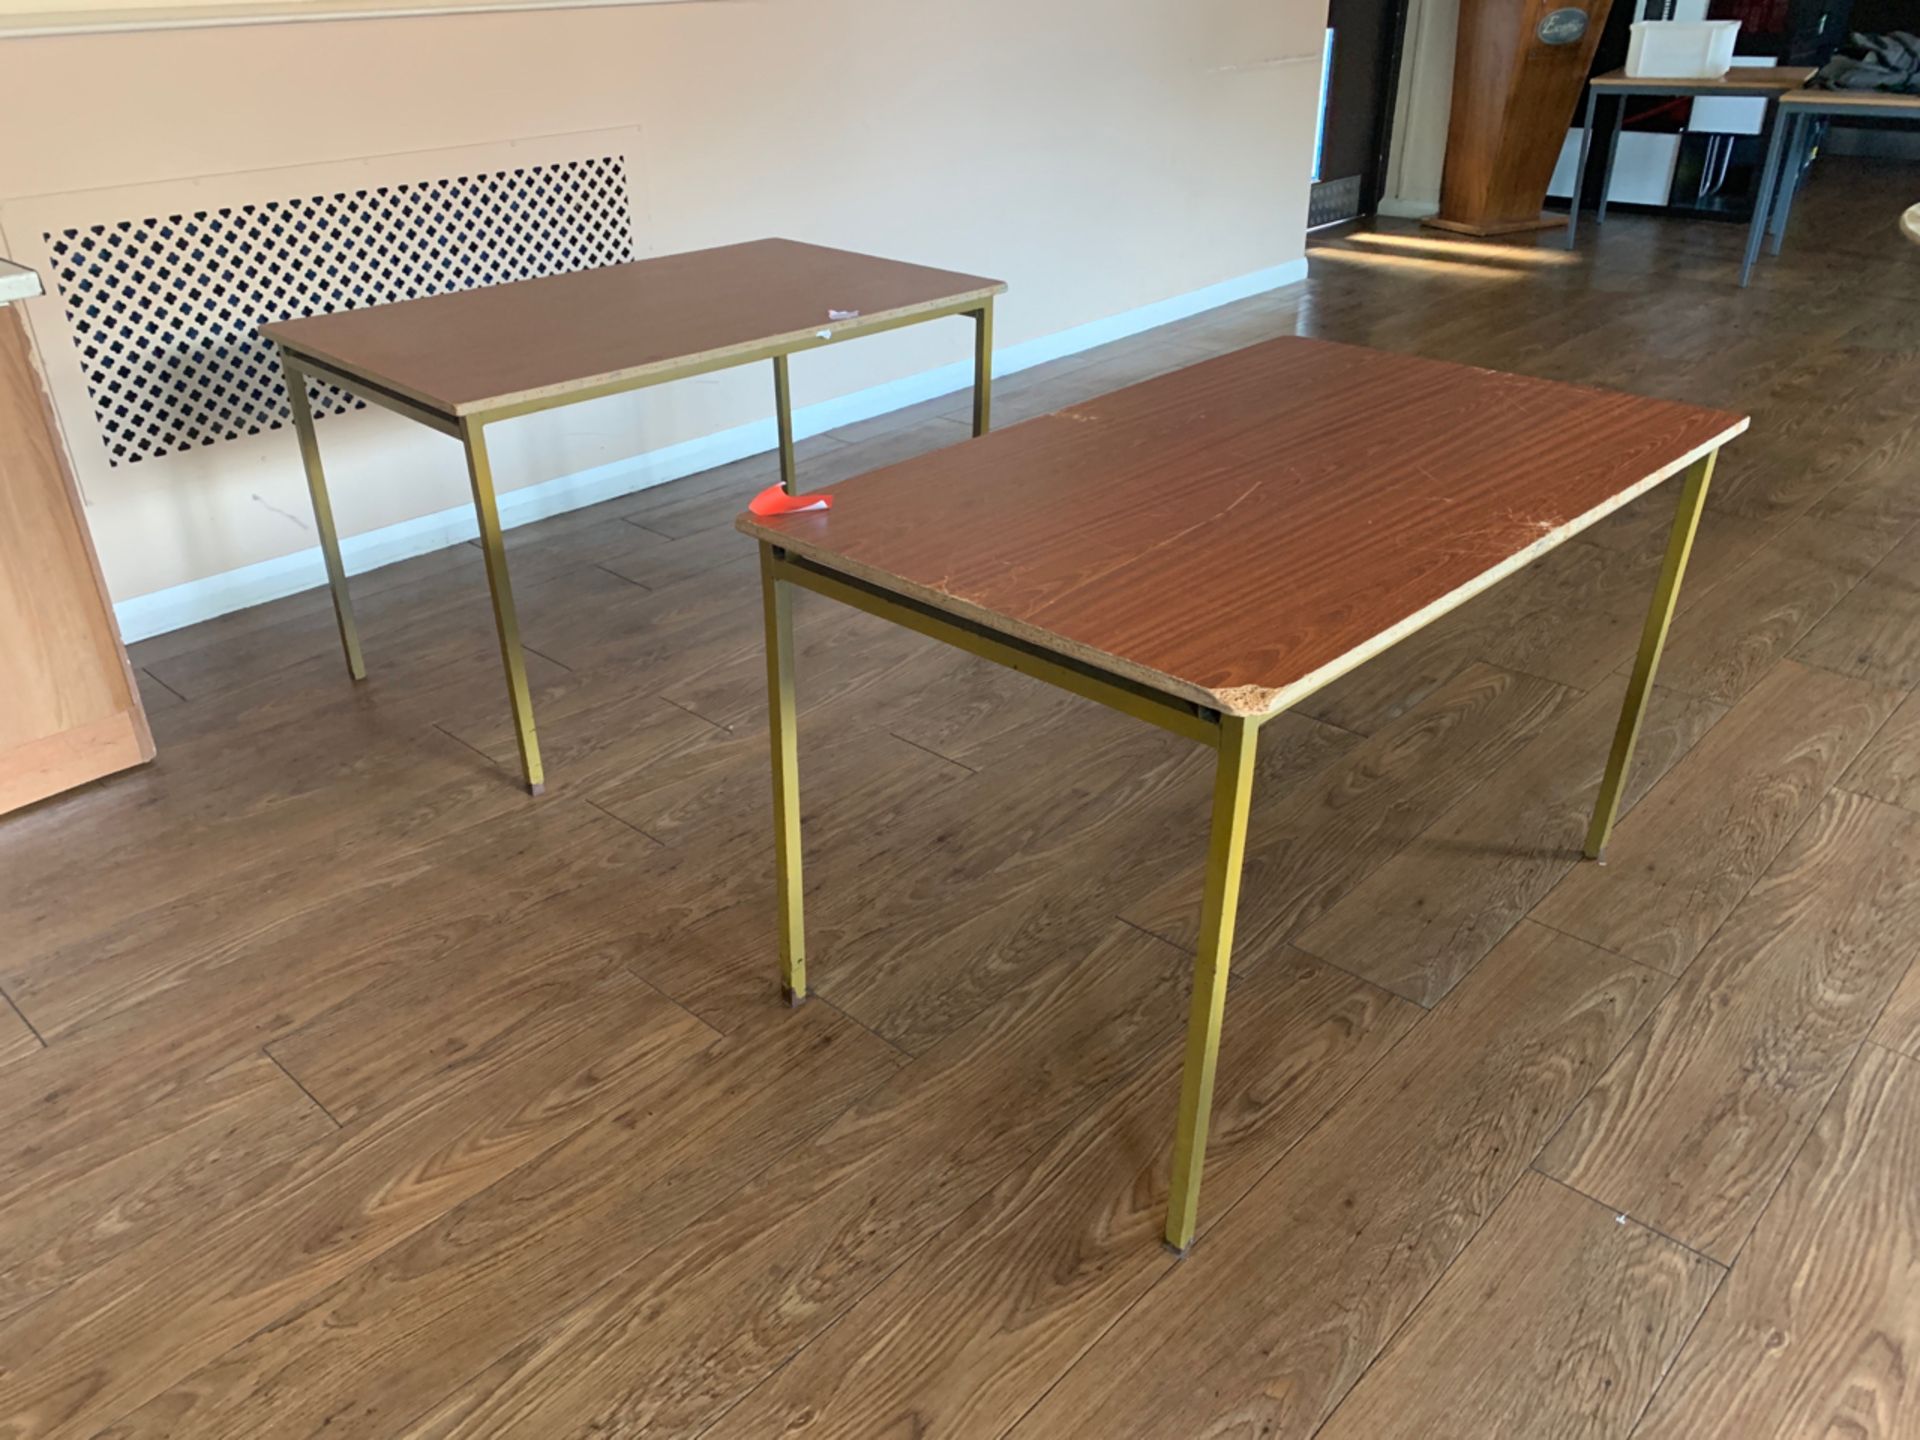 Set of 4 Rectangular Tables on Metal Frame - Image 3 of 6